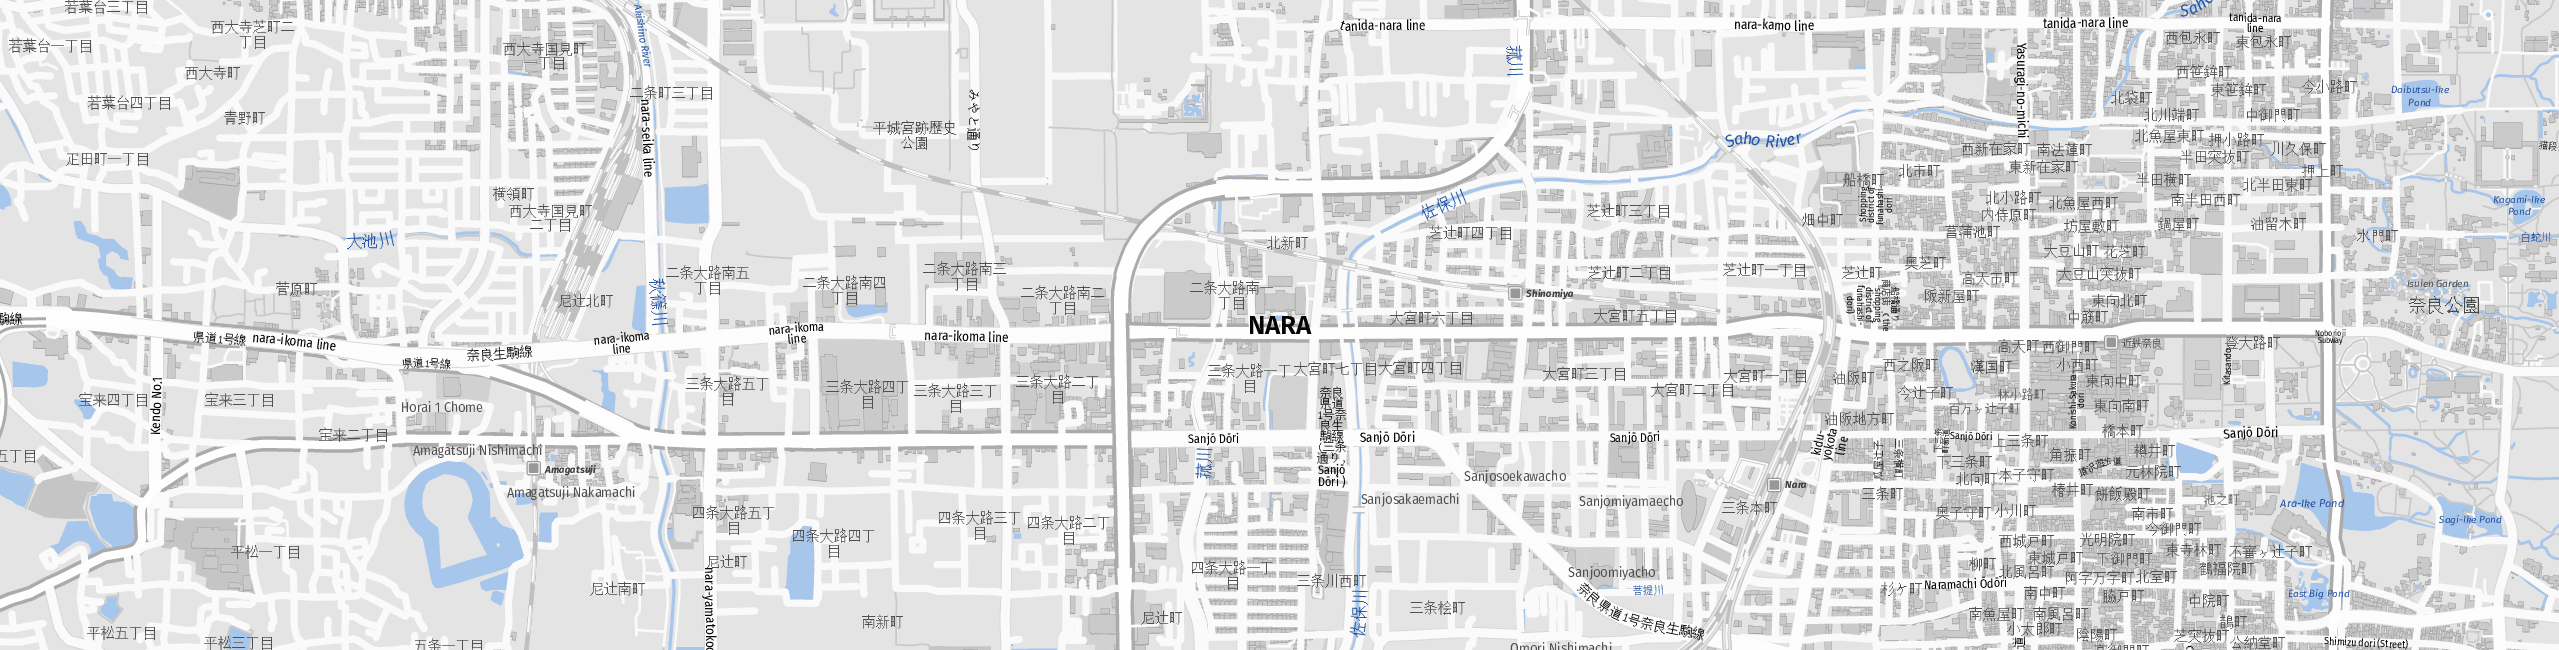 Stadtplan Nara zum Downloaden.